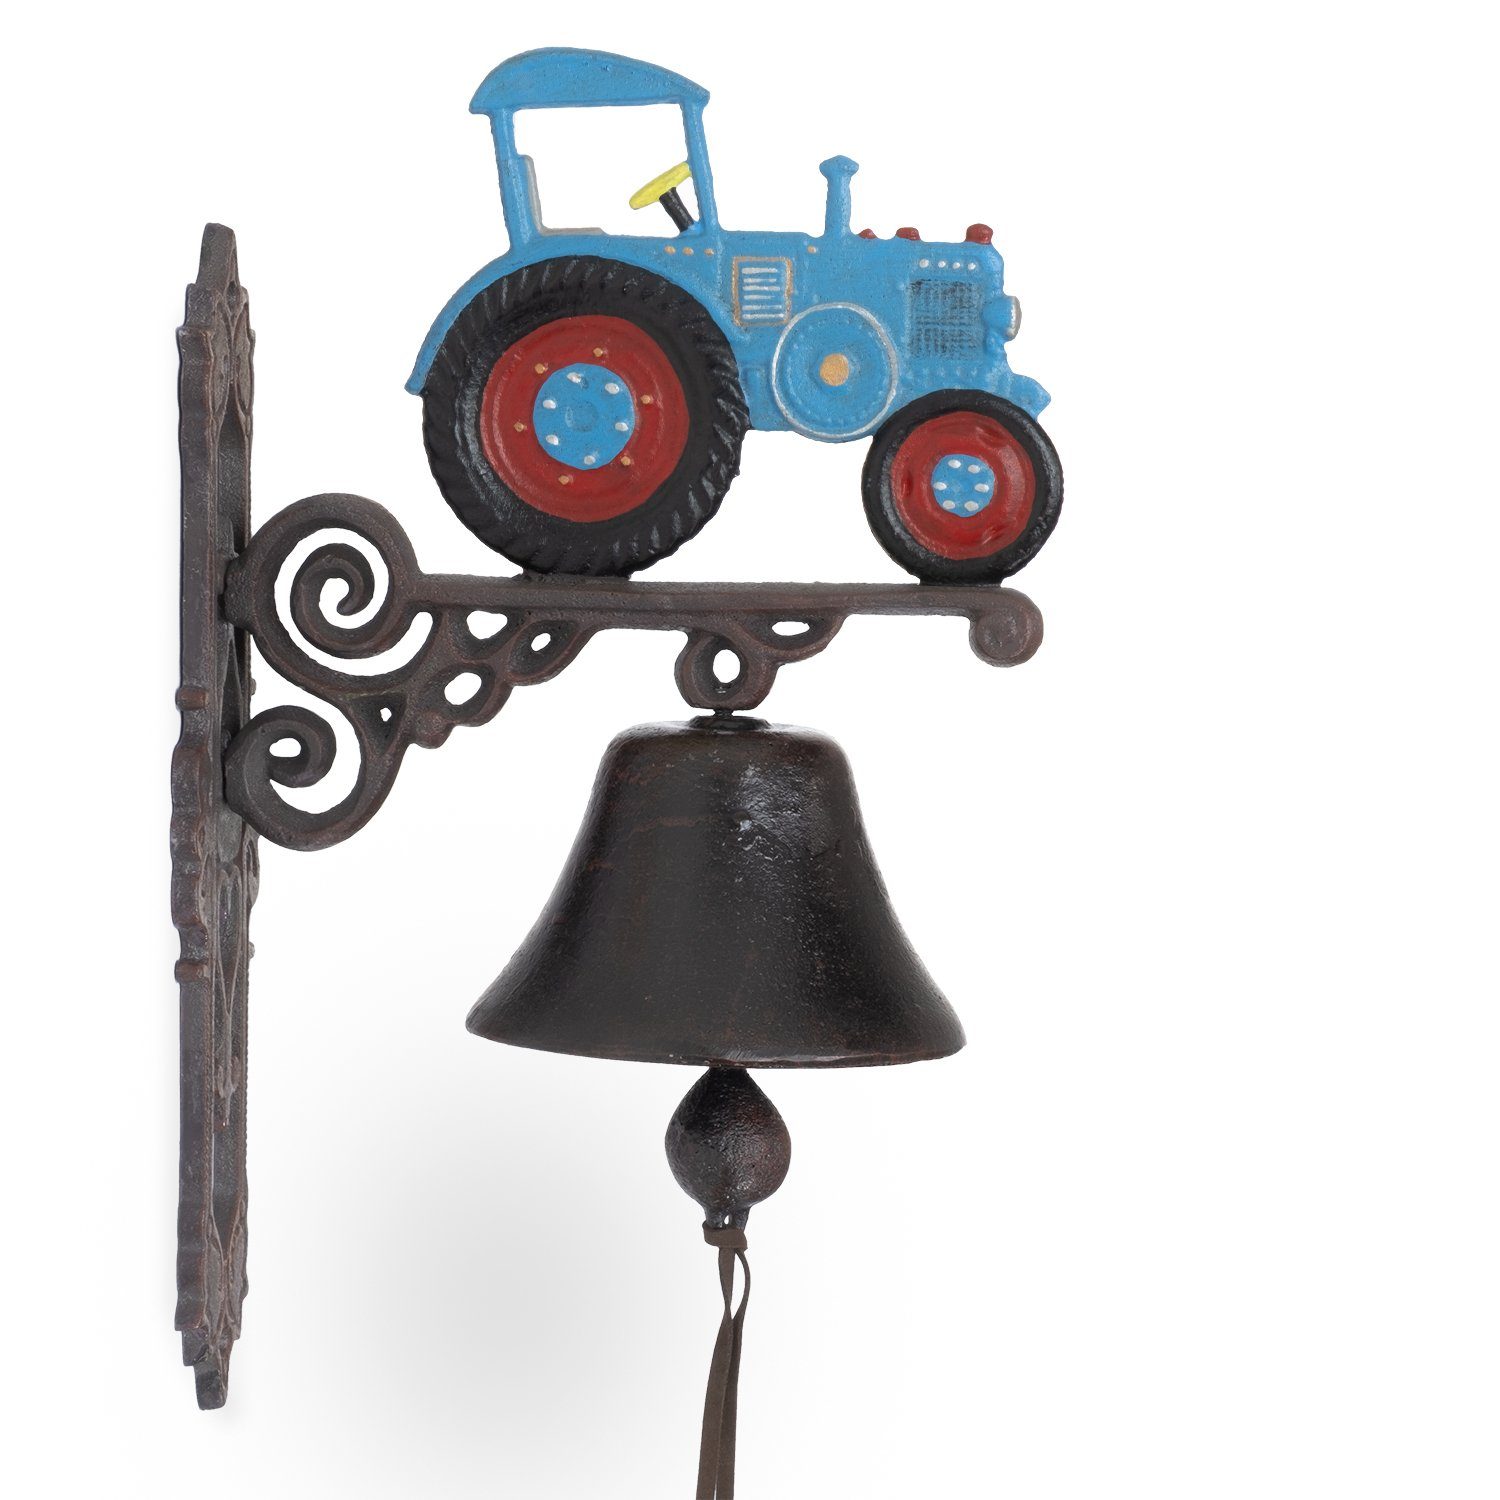 Wandglocke blau, Glocke Moritz Traktor Gong (Wandglocke), Gusseisen Antik Trecker Gartenfigur Klingel Türglocke Landhaus Glocke